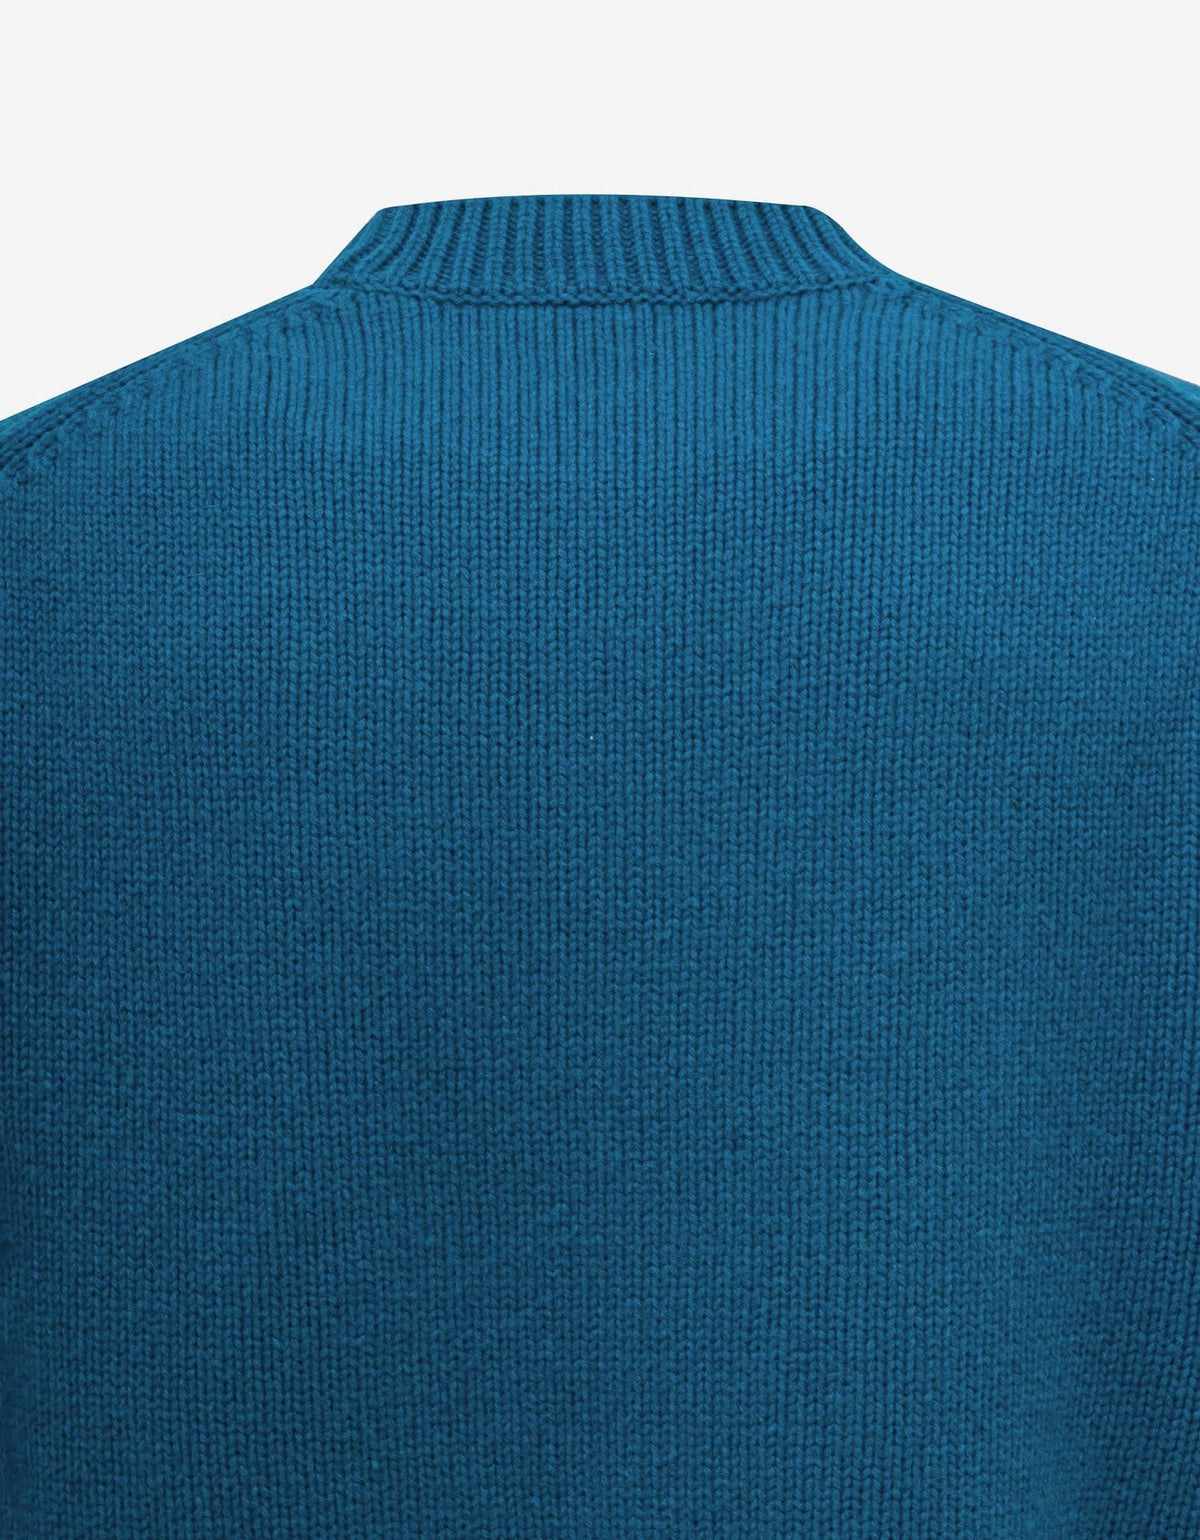 Kenzo Blue 'Kenzo Elephant' Wool Sweater